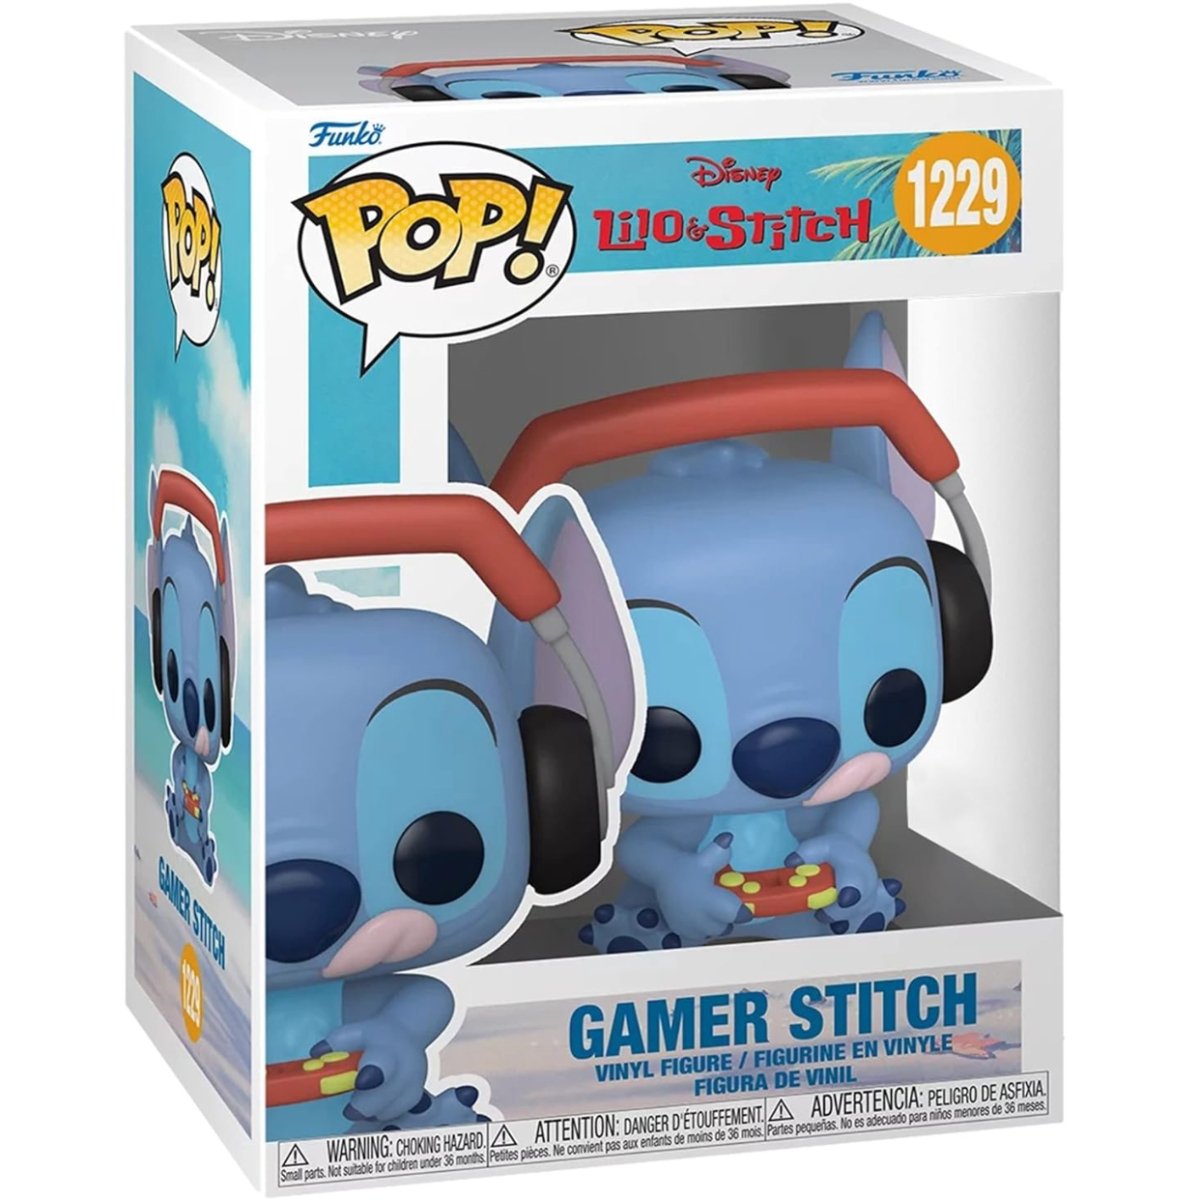 Lilo & Stitch - Gamer Stitch #1229 - Funko Pop! Vinyl Disney - Persona Toys